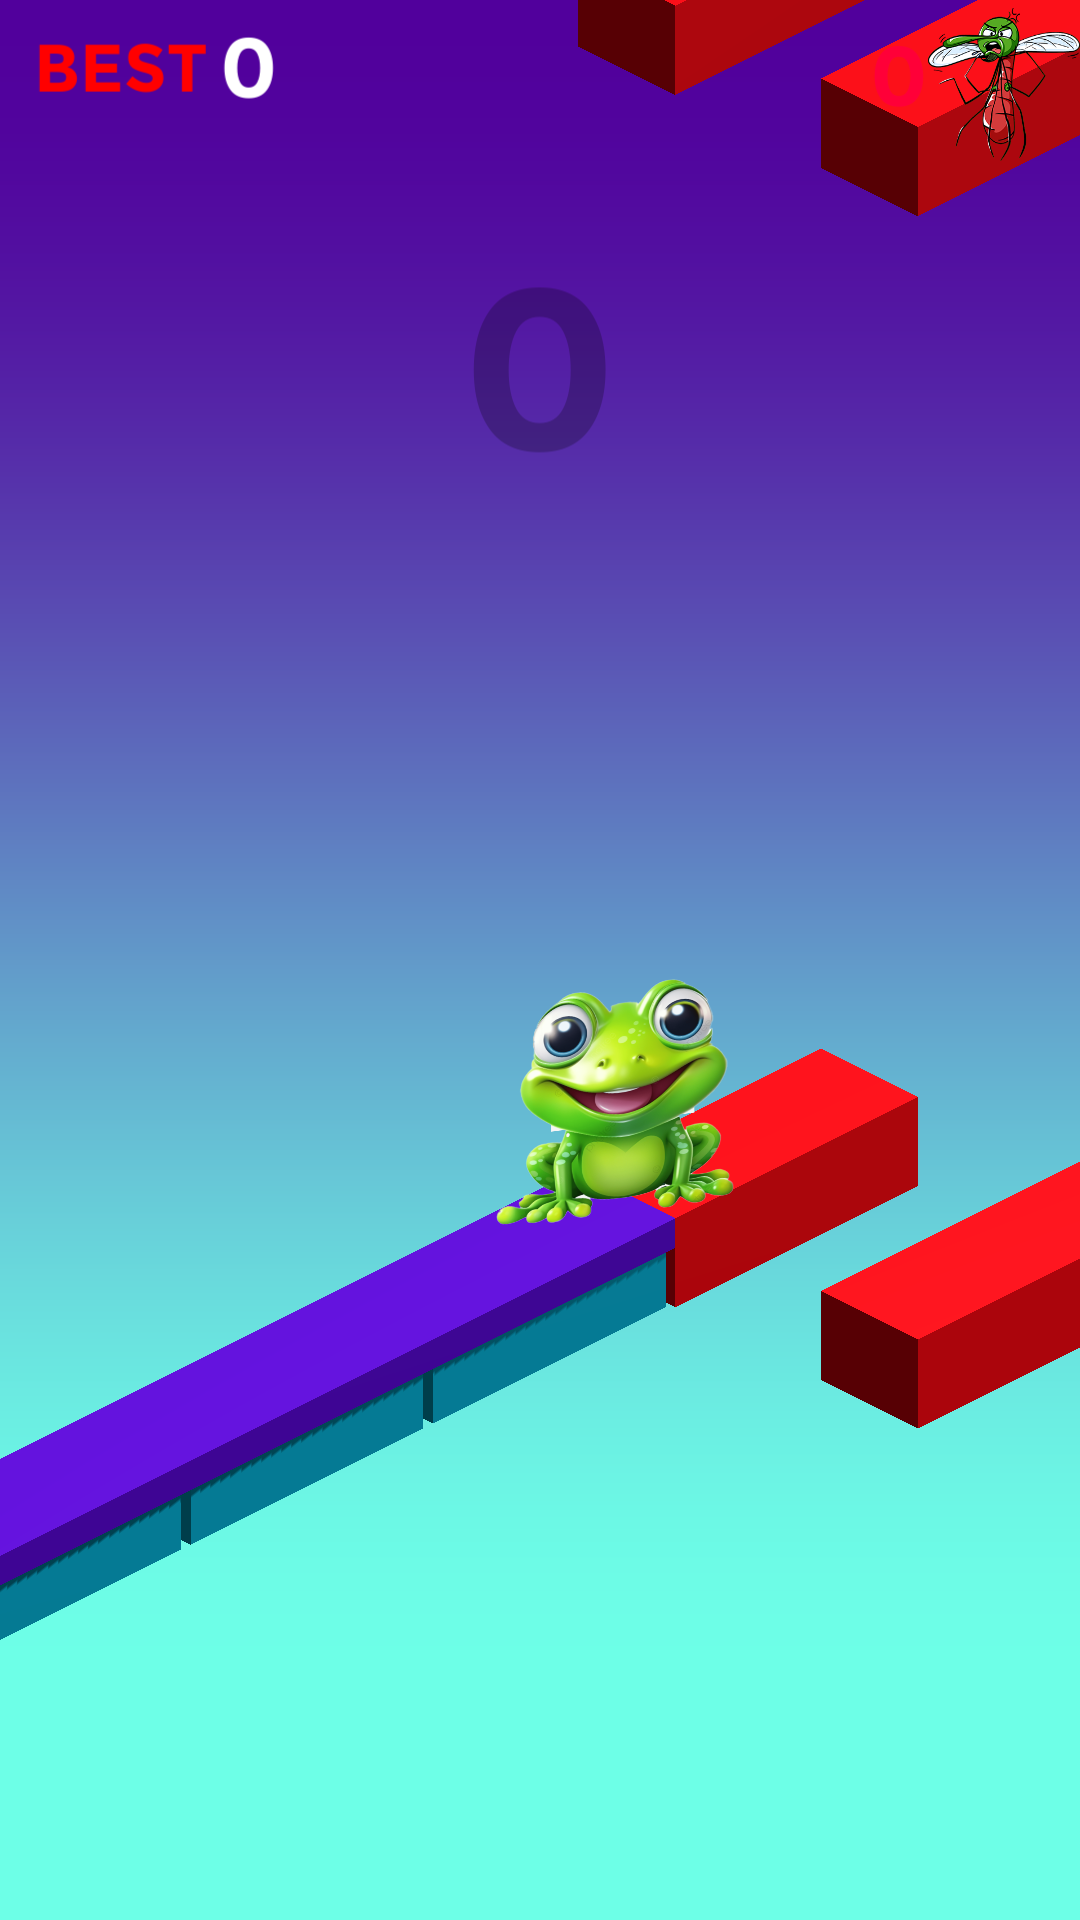 Frog Hustles遊戲截圖